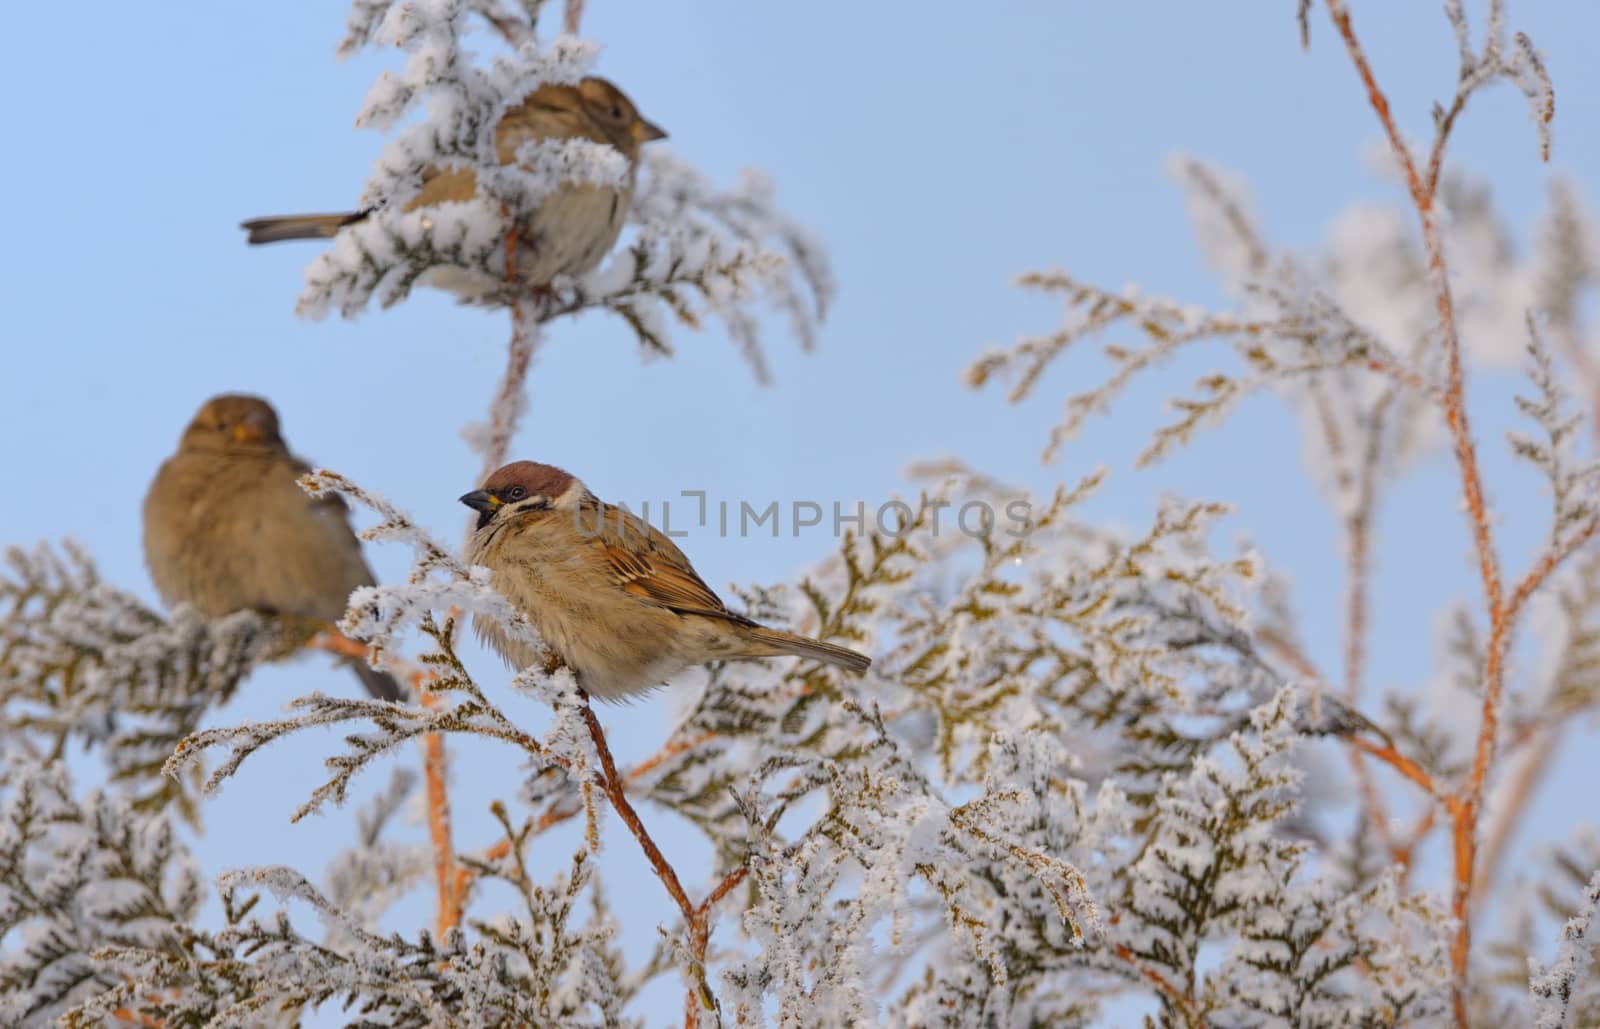 Little Sparrows on pine tree branch in winter